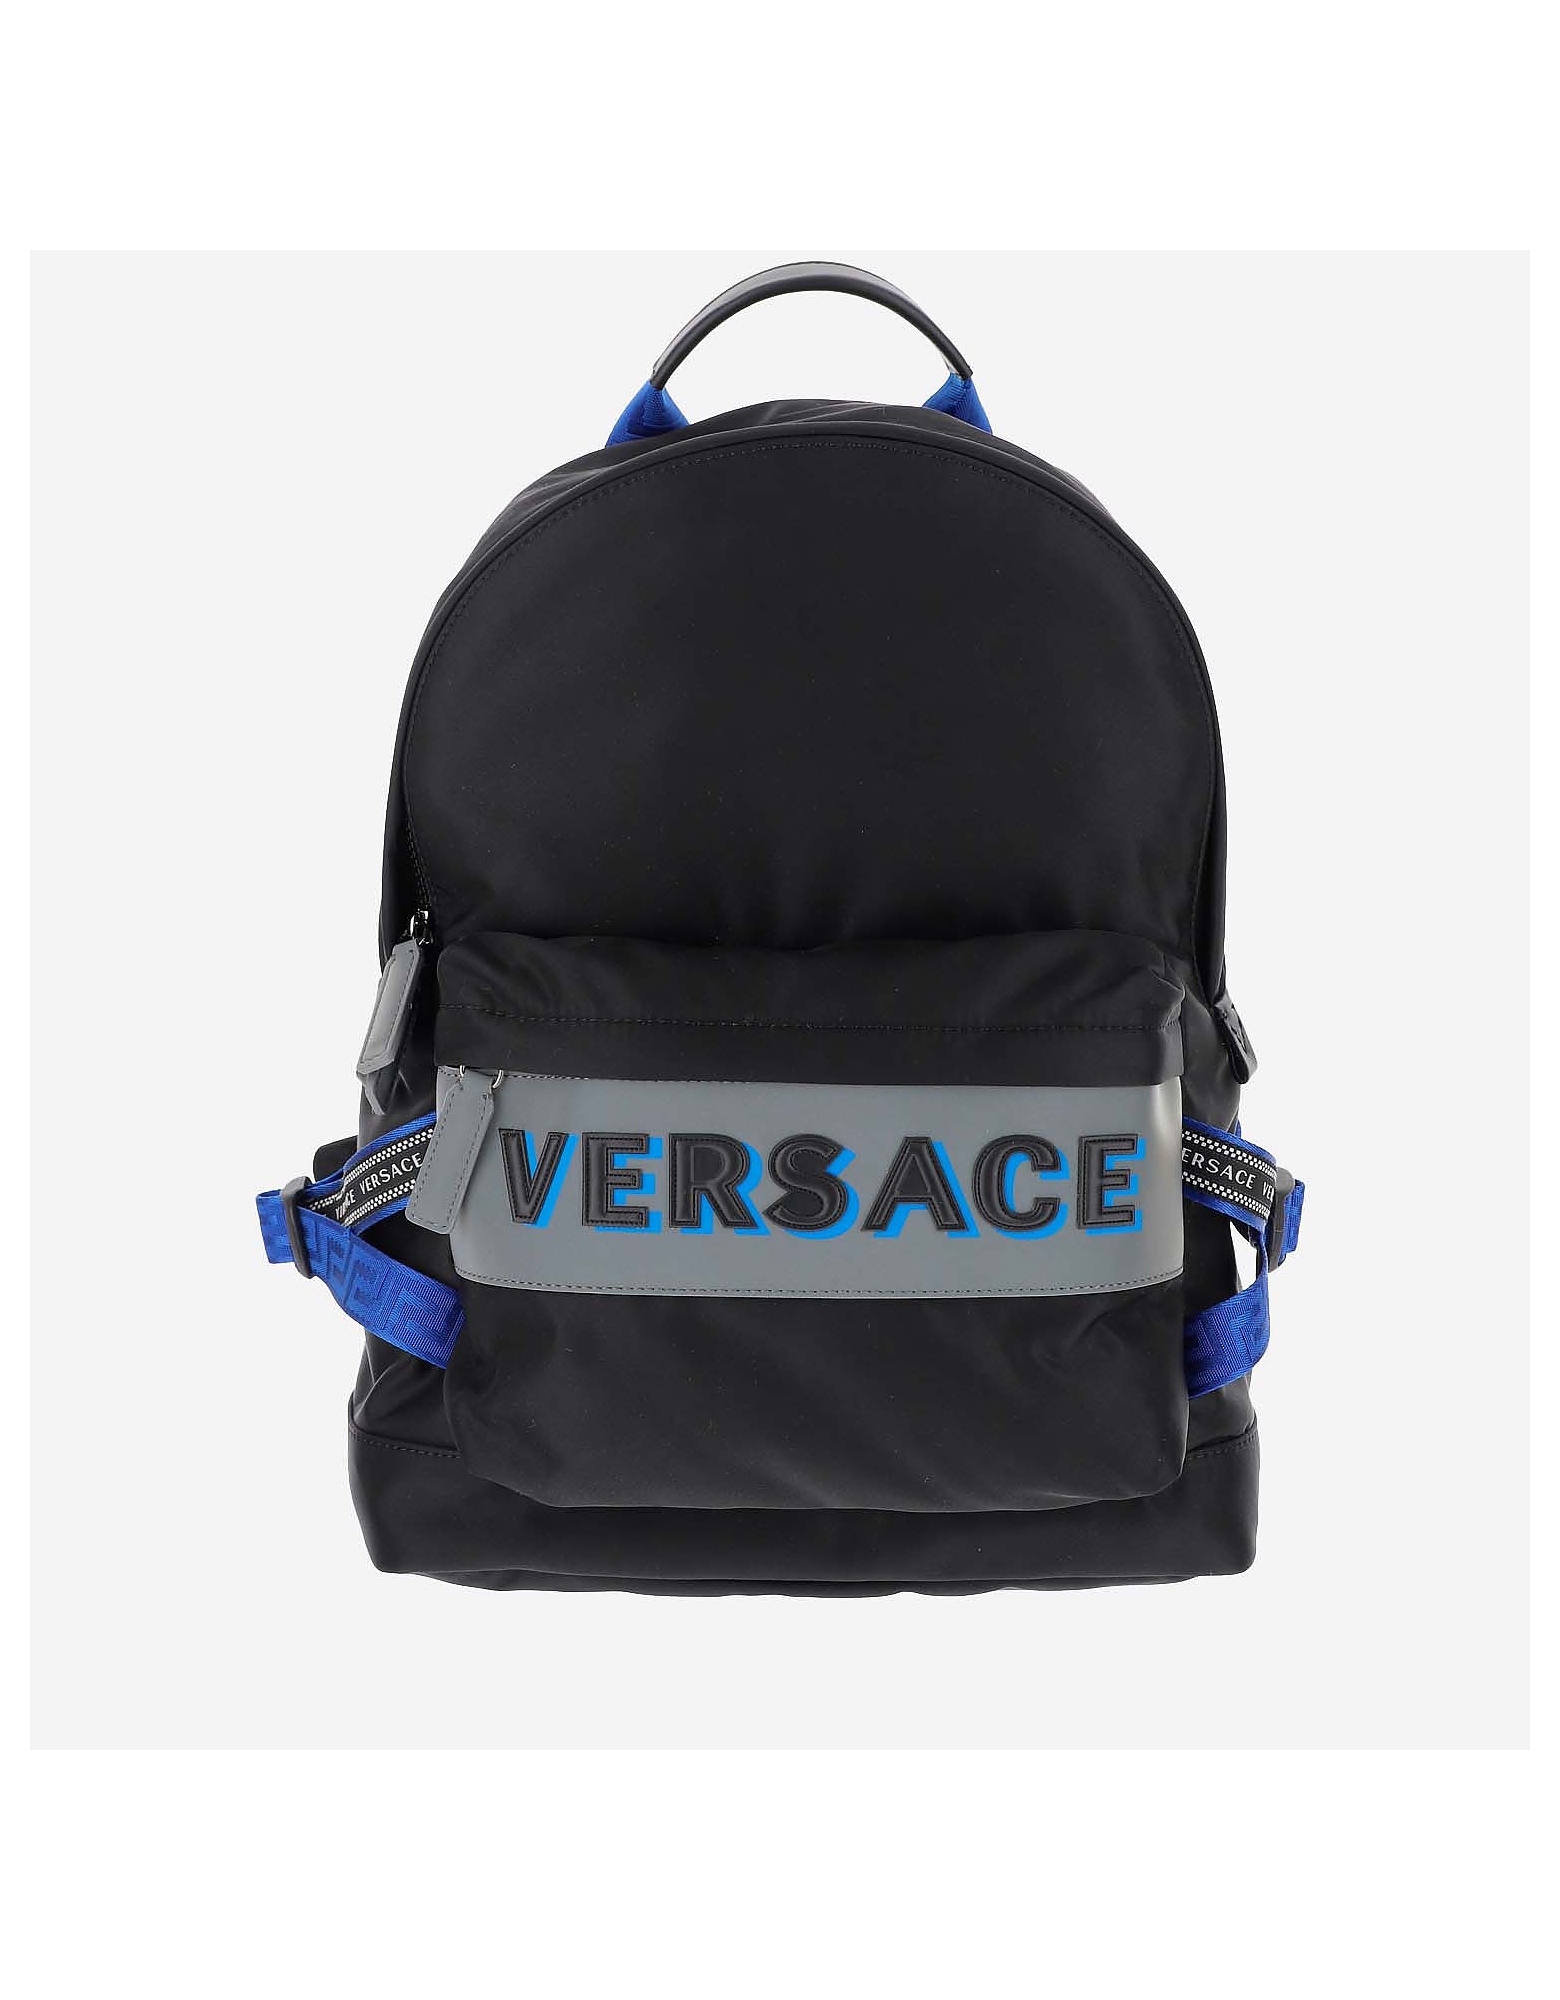 EAN 8053850334858 product image for Versace Designer Men's Bags, Black Nylon Backpack | upcitemdb.com